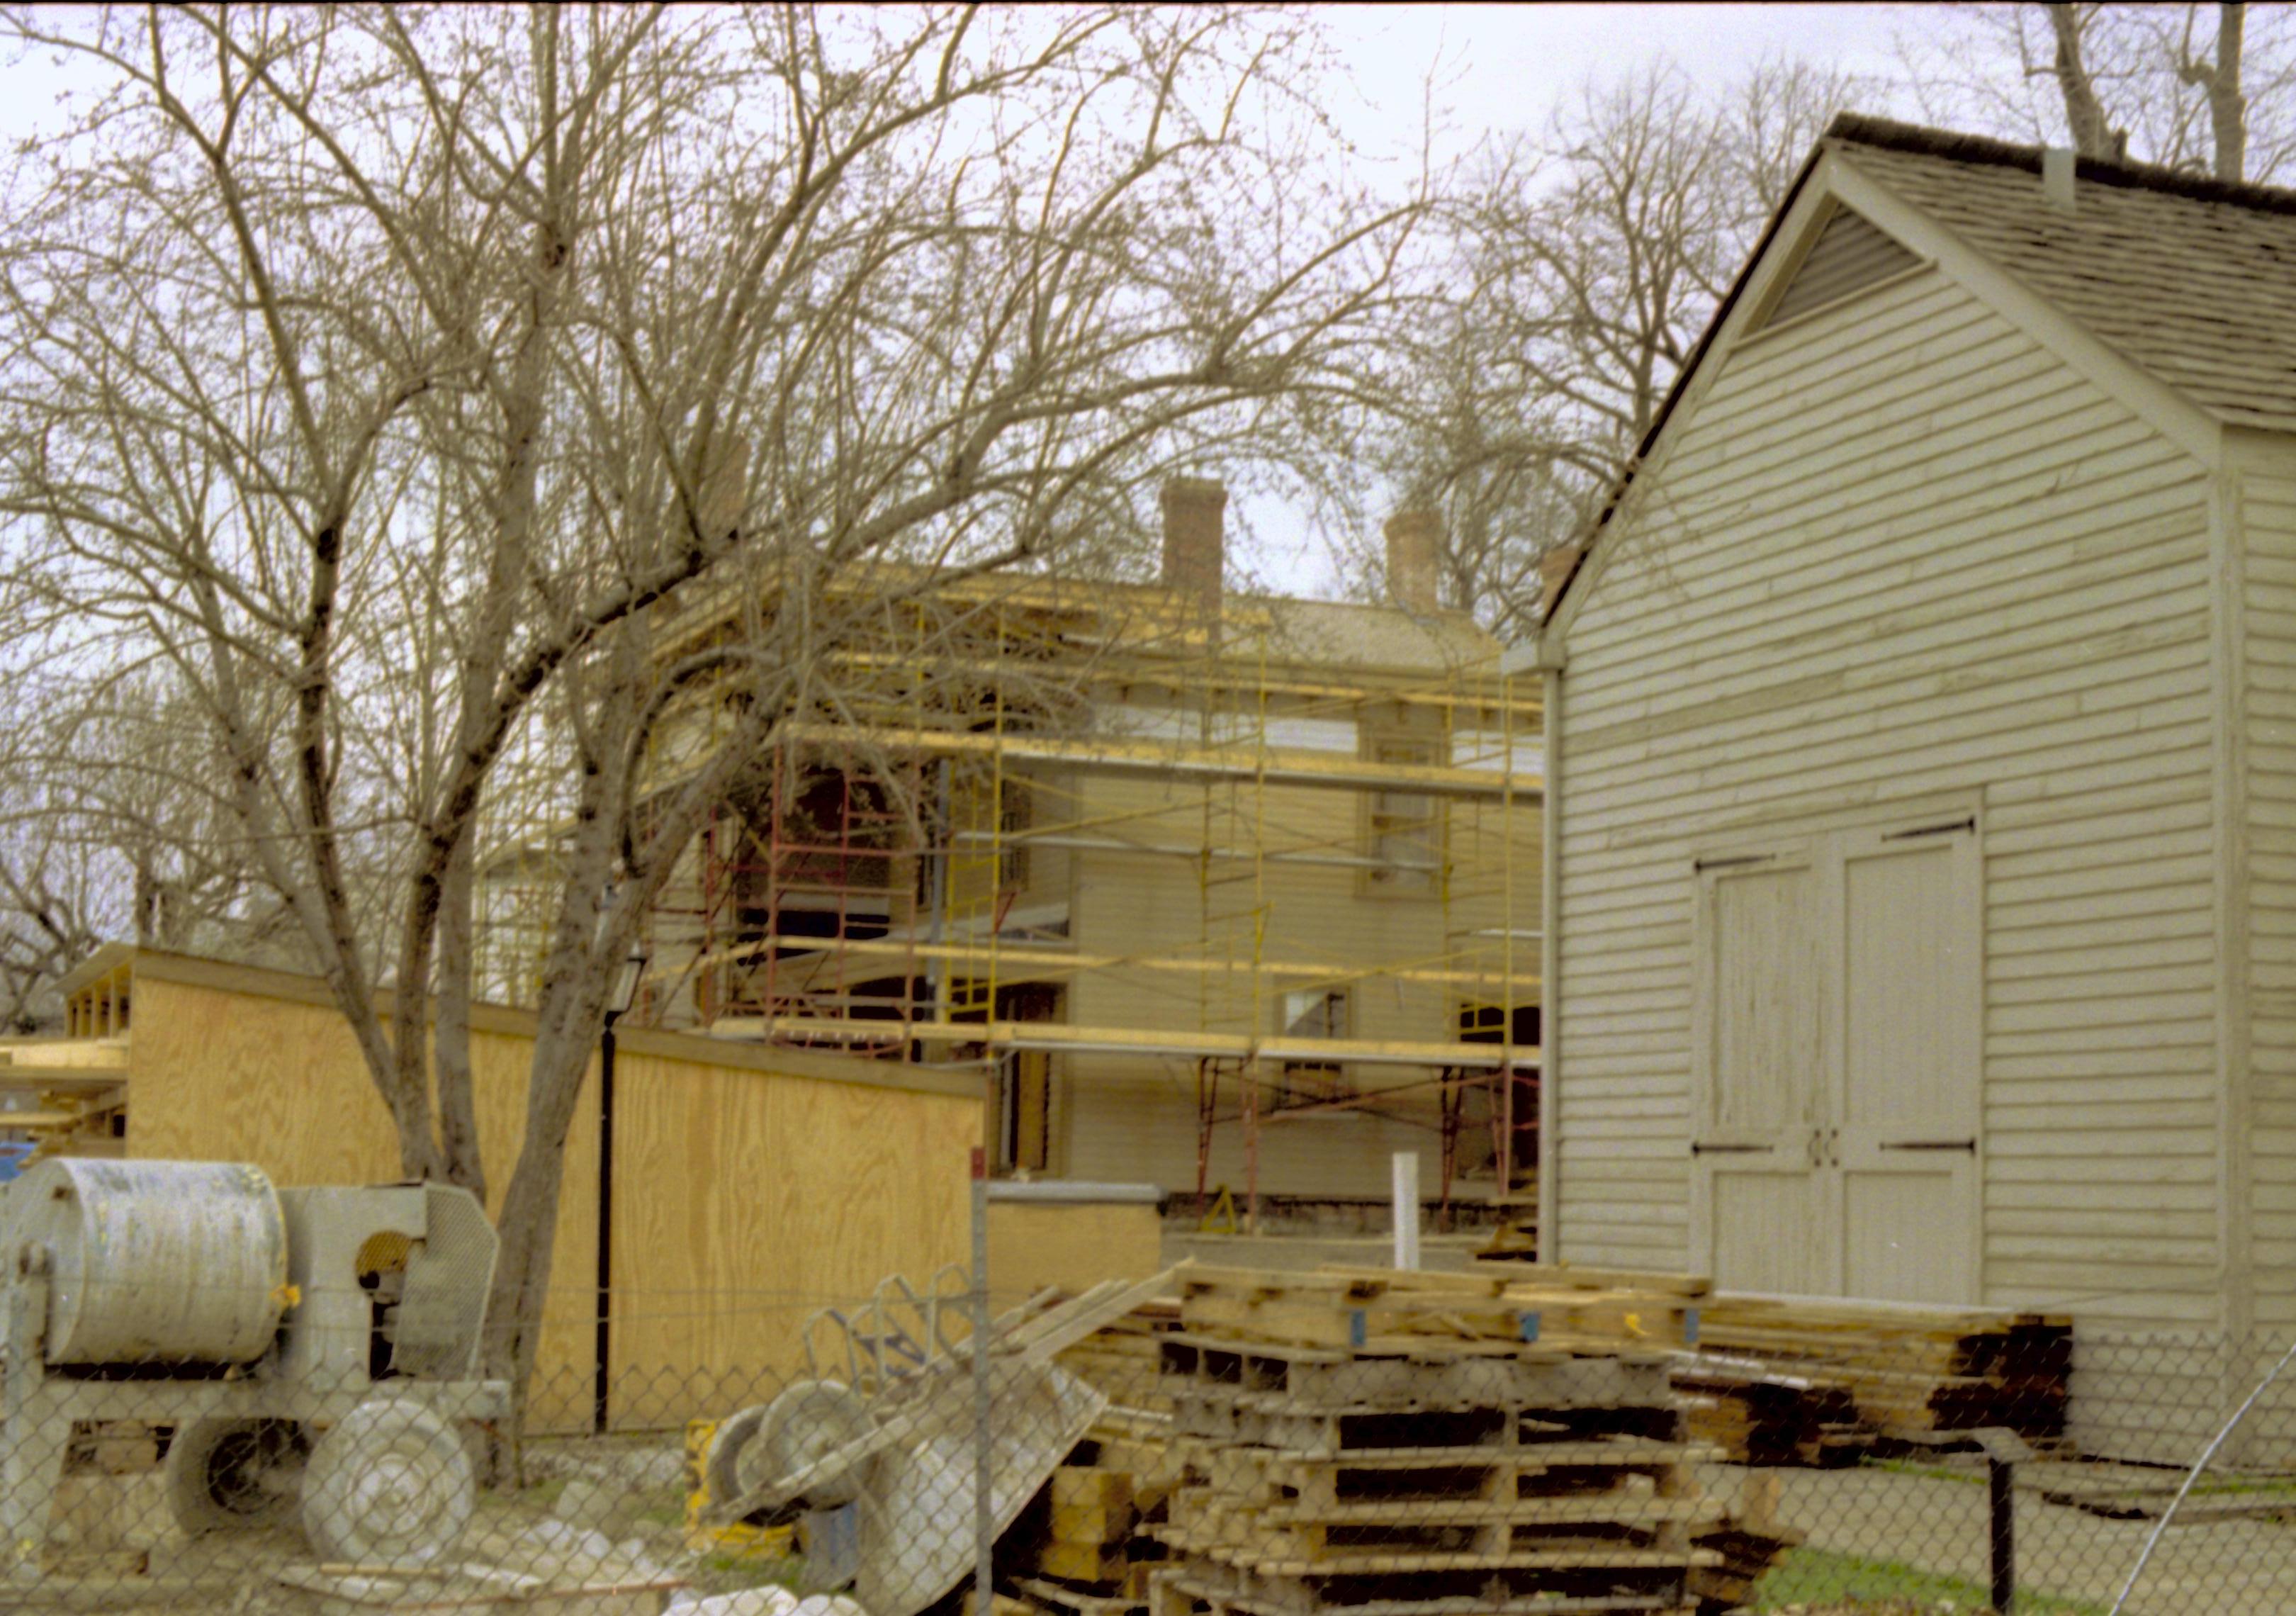   Neg. sleeve (file no. 93A) Lincoln, Home, restoration, scaffolding, south, privy